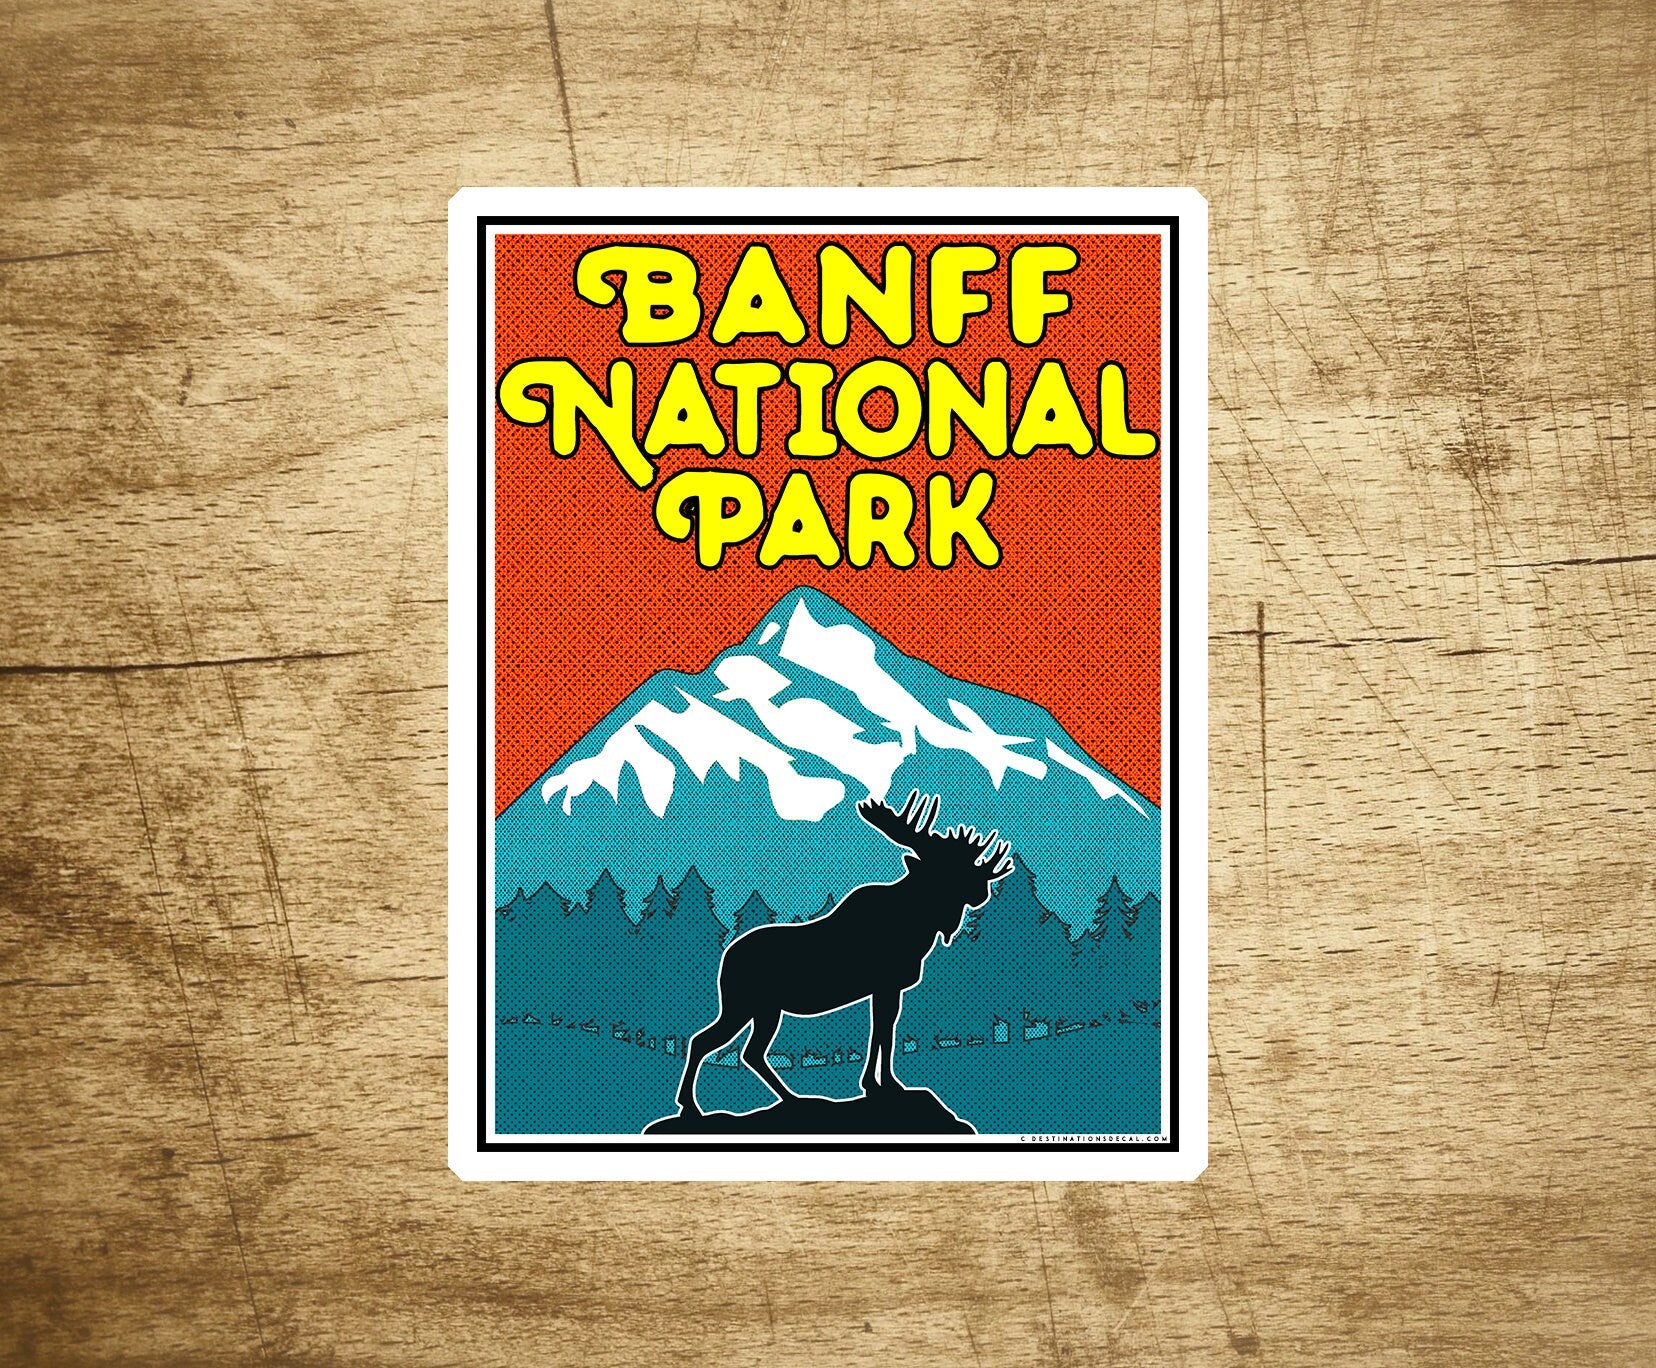 Banff National Park Alberta Canada Decal Sticker 3" x 4" Moose Mountains